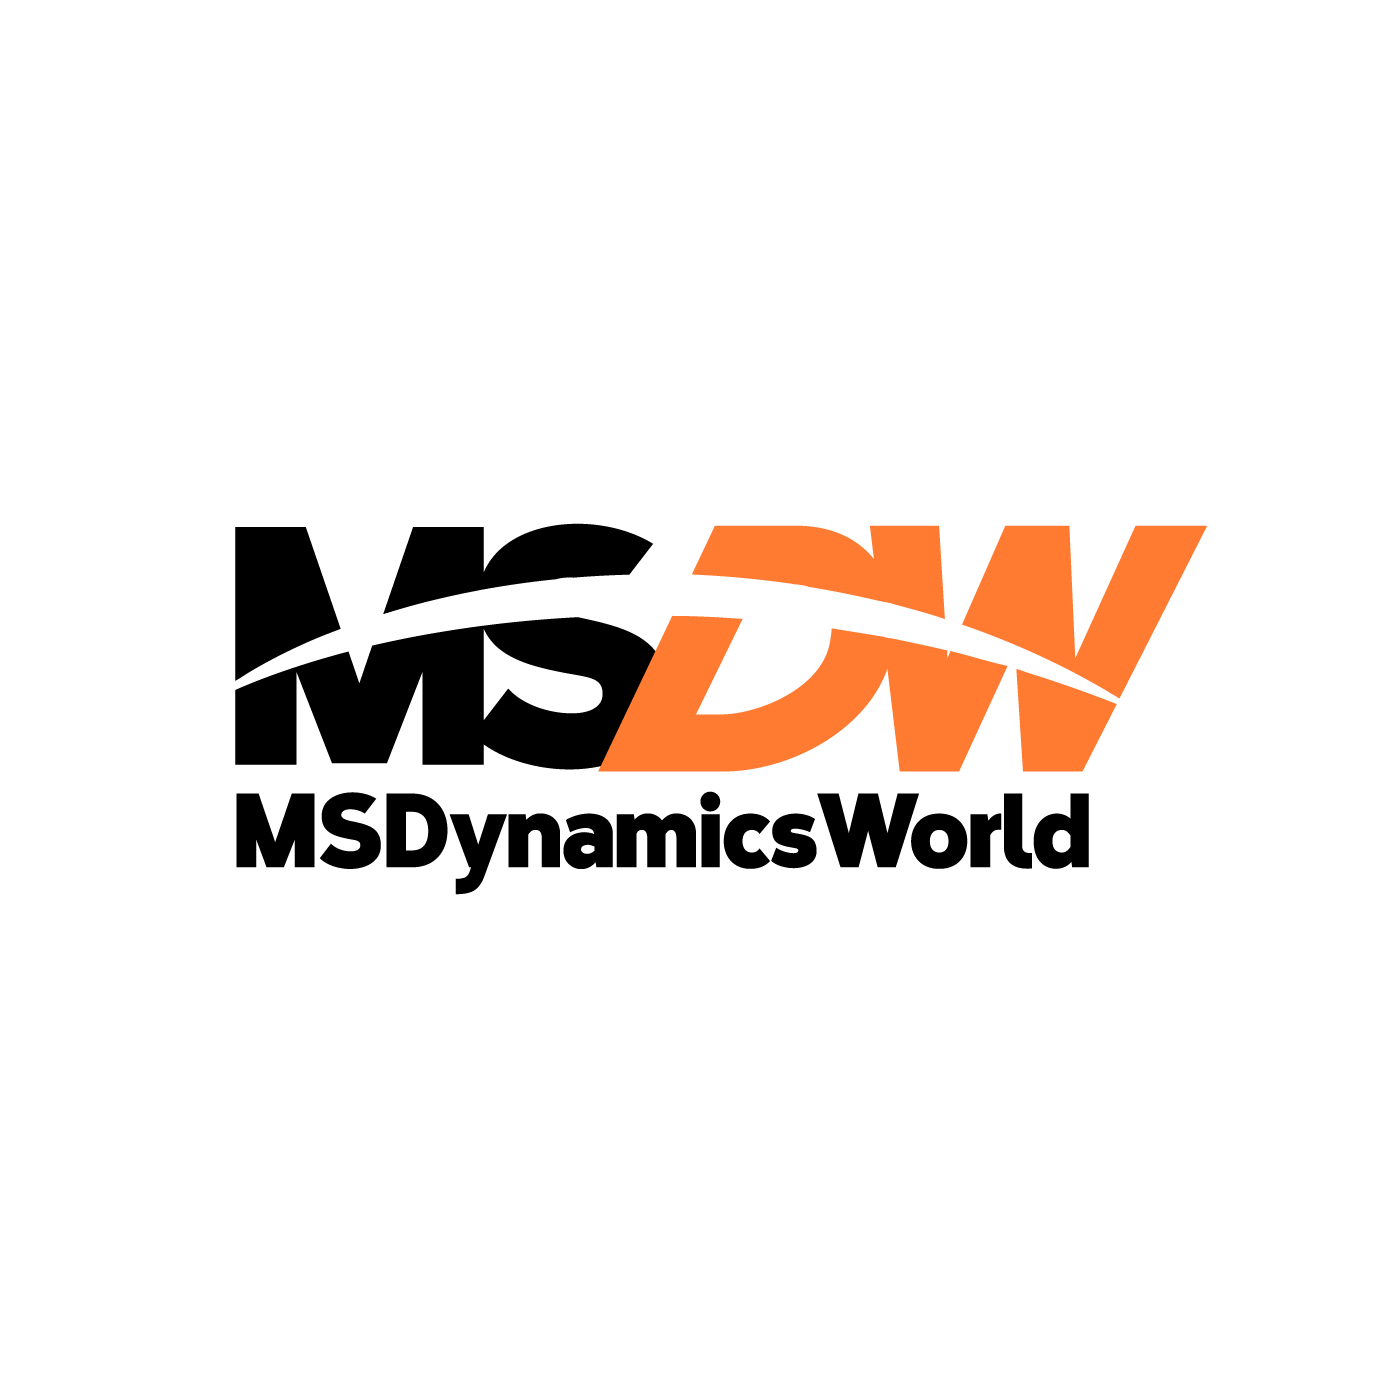 MS Dynamics world logo